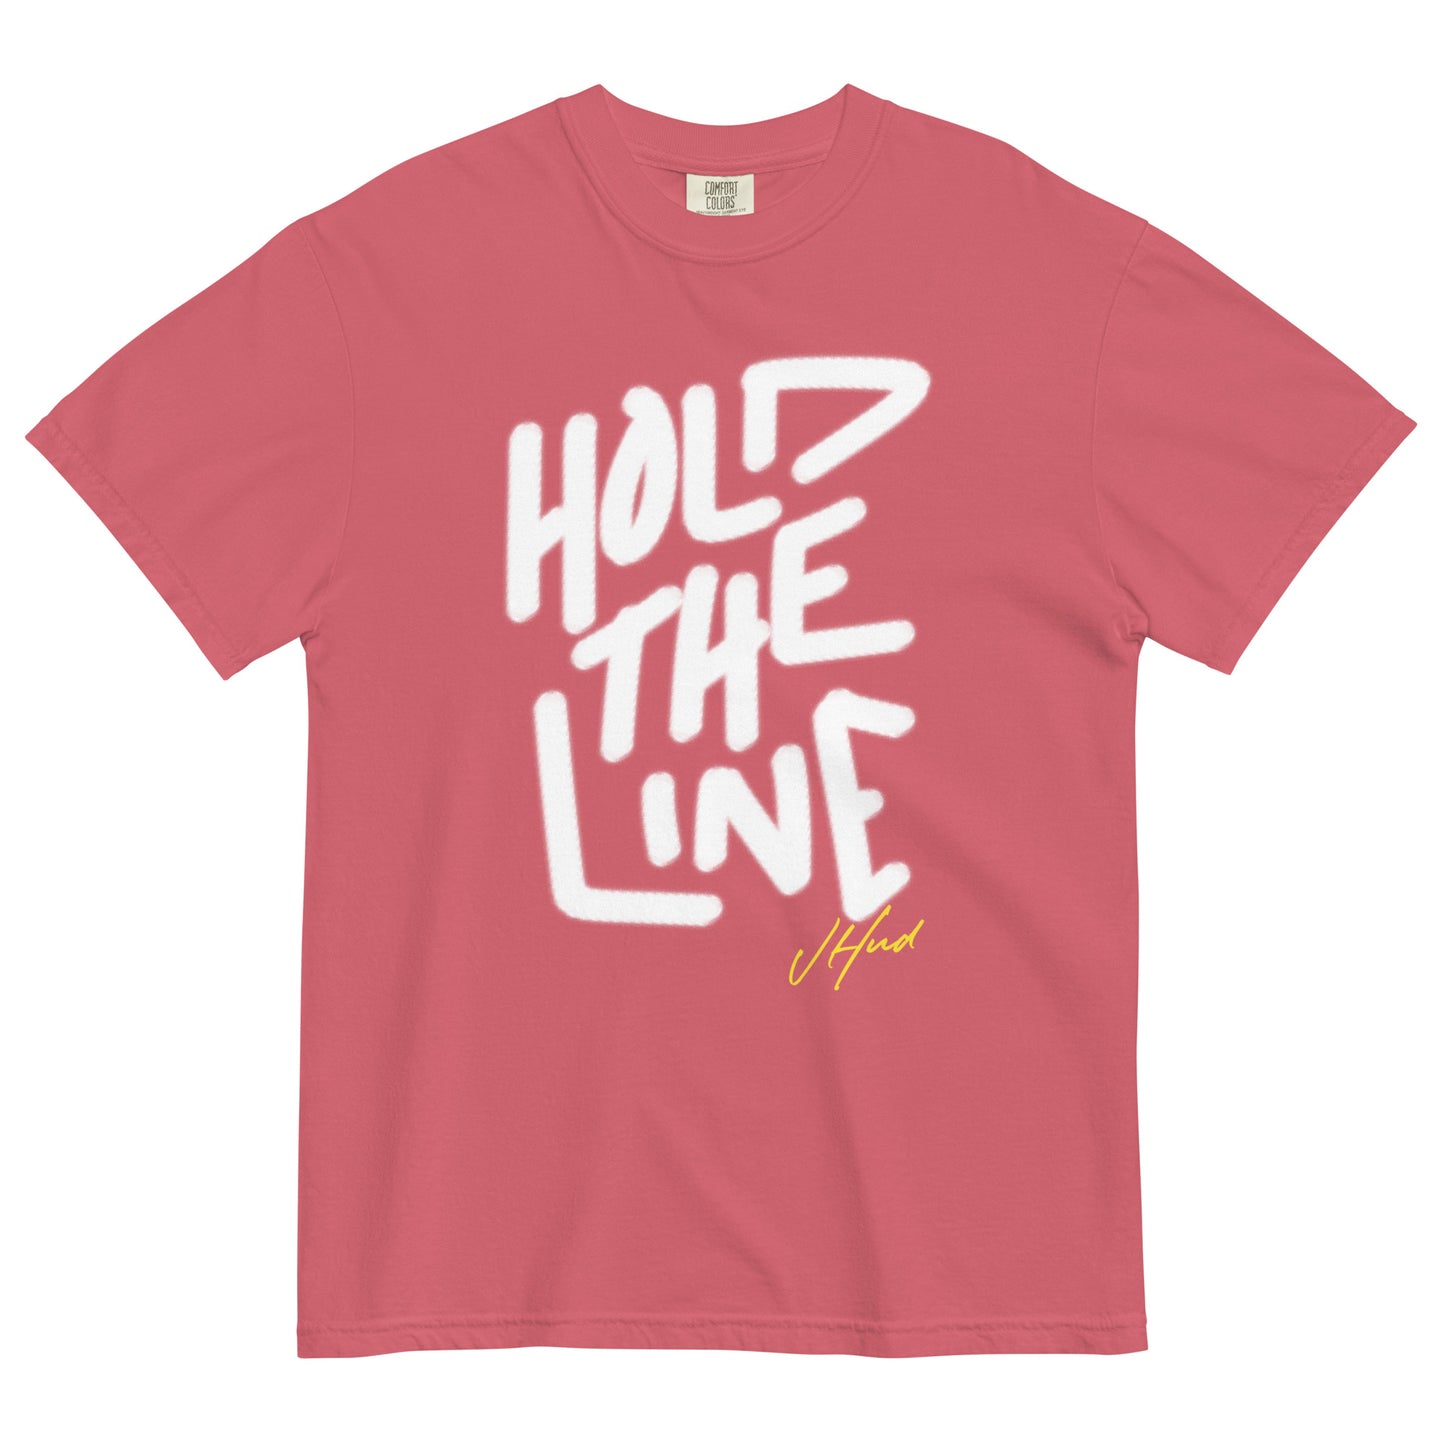 Hold the Line Heavyweight T-Shirt - Watermelon